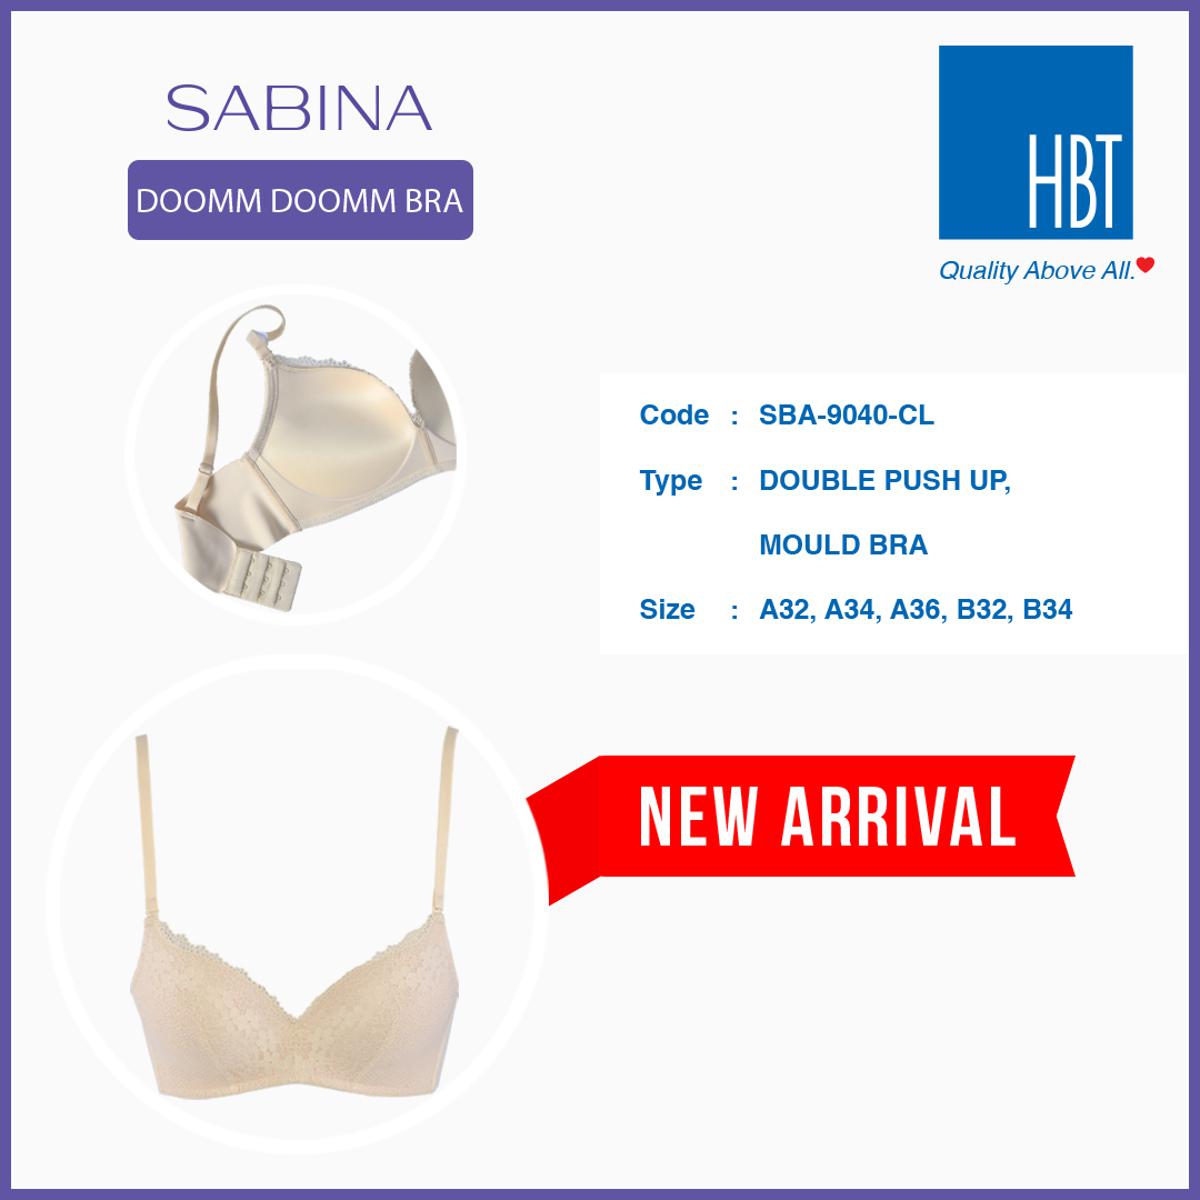 Sabina Sabina Replacement Bra Straps Size 12 MM Accessory